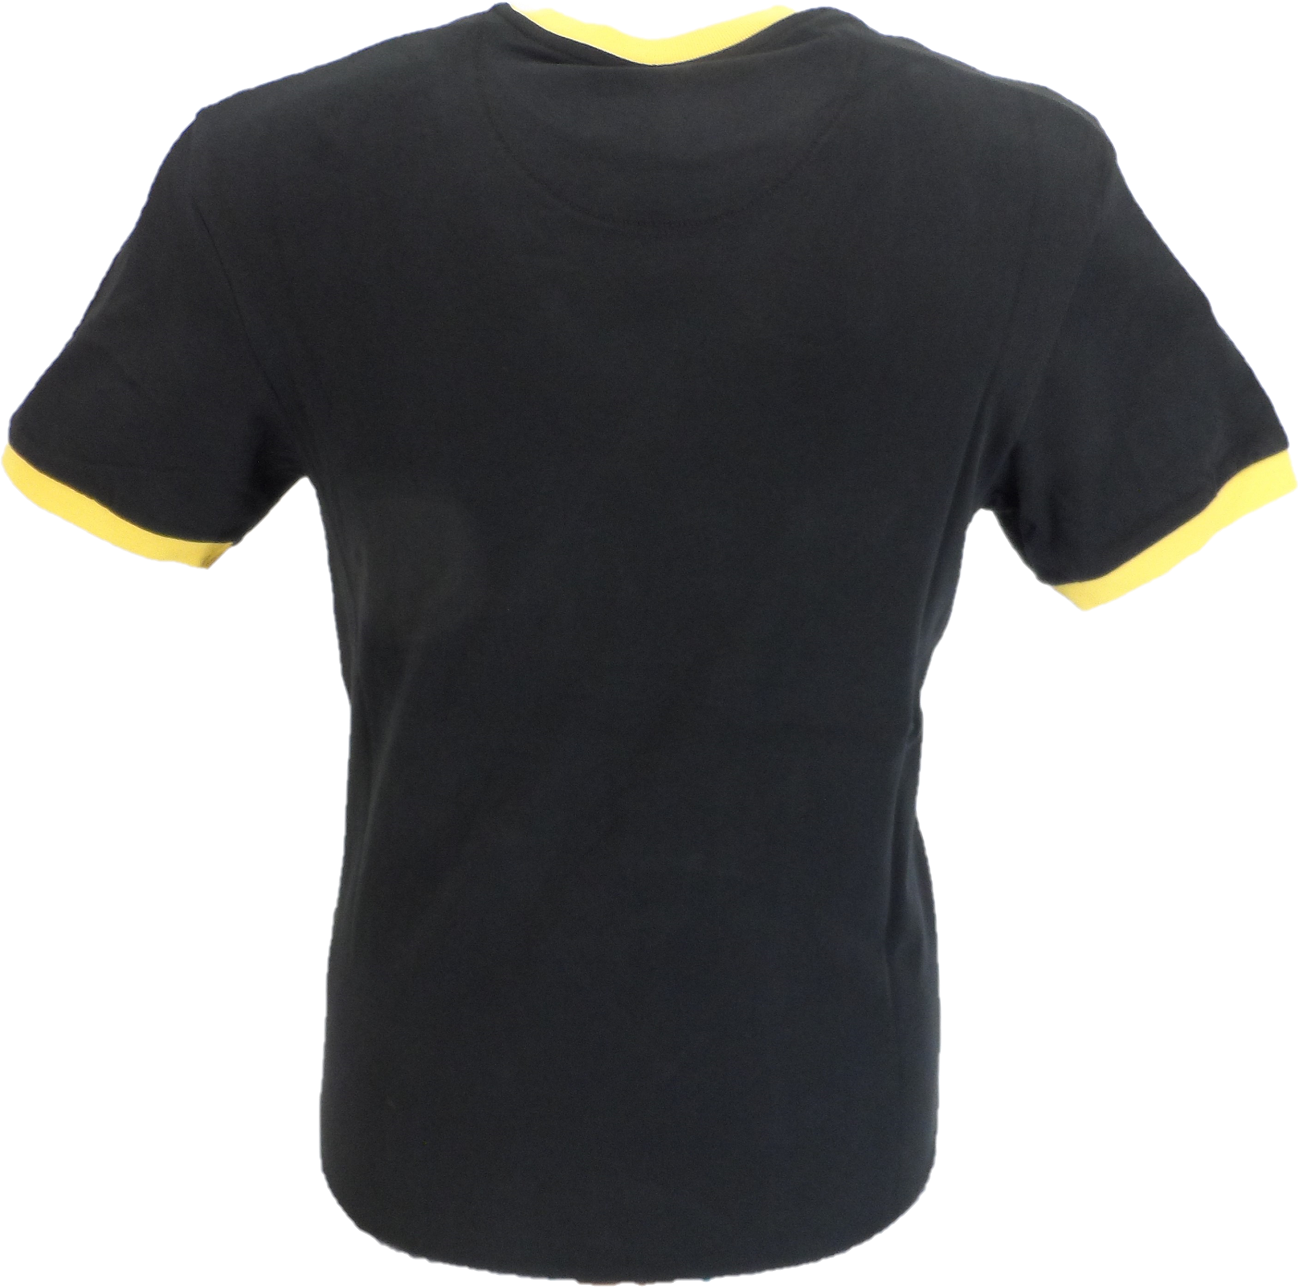 Trojan Records camiseta color melocotón 100% algodón con logo rasta negro para hombre